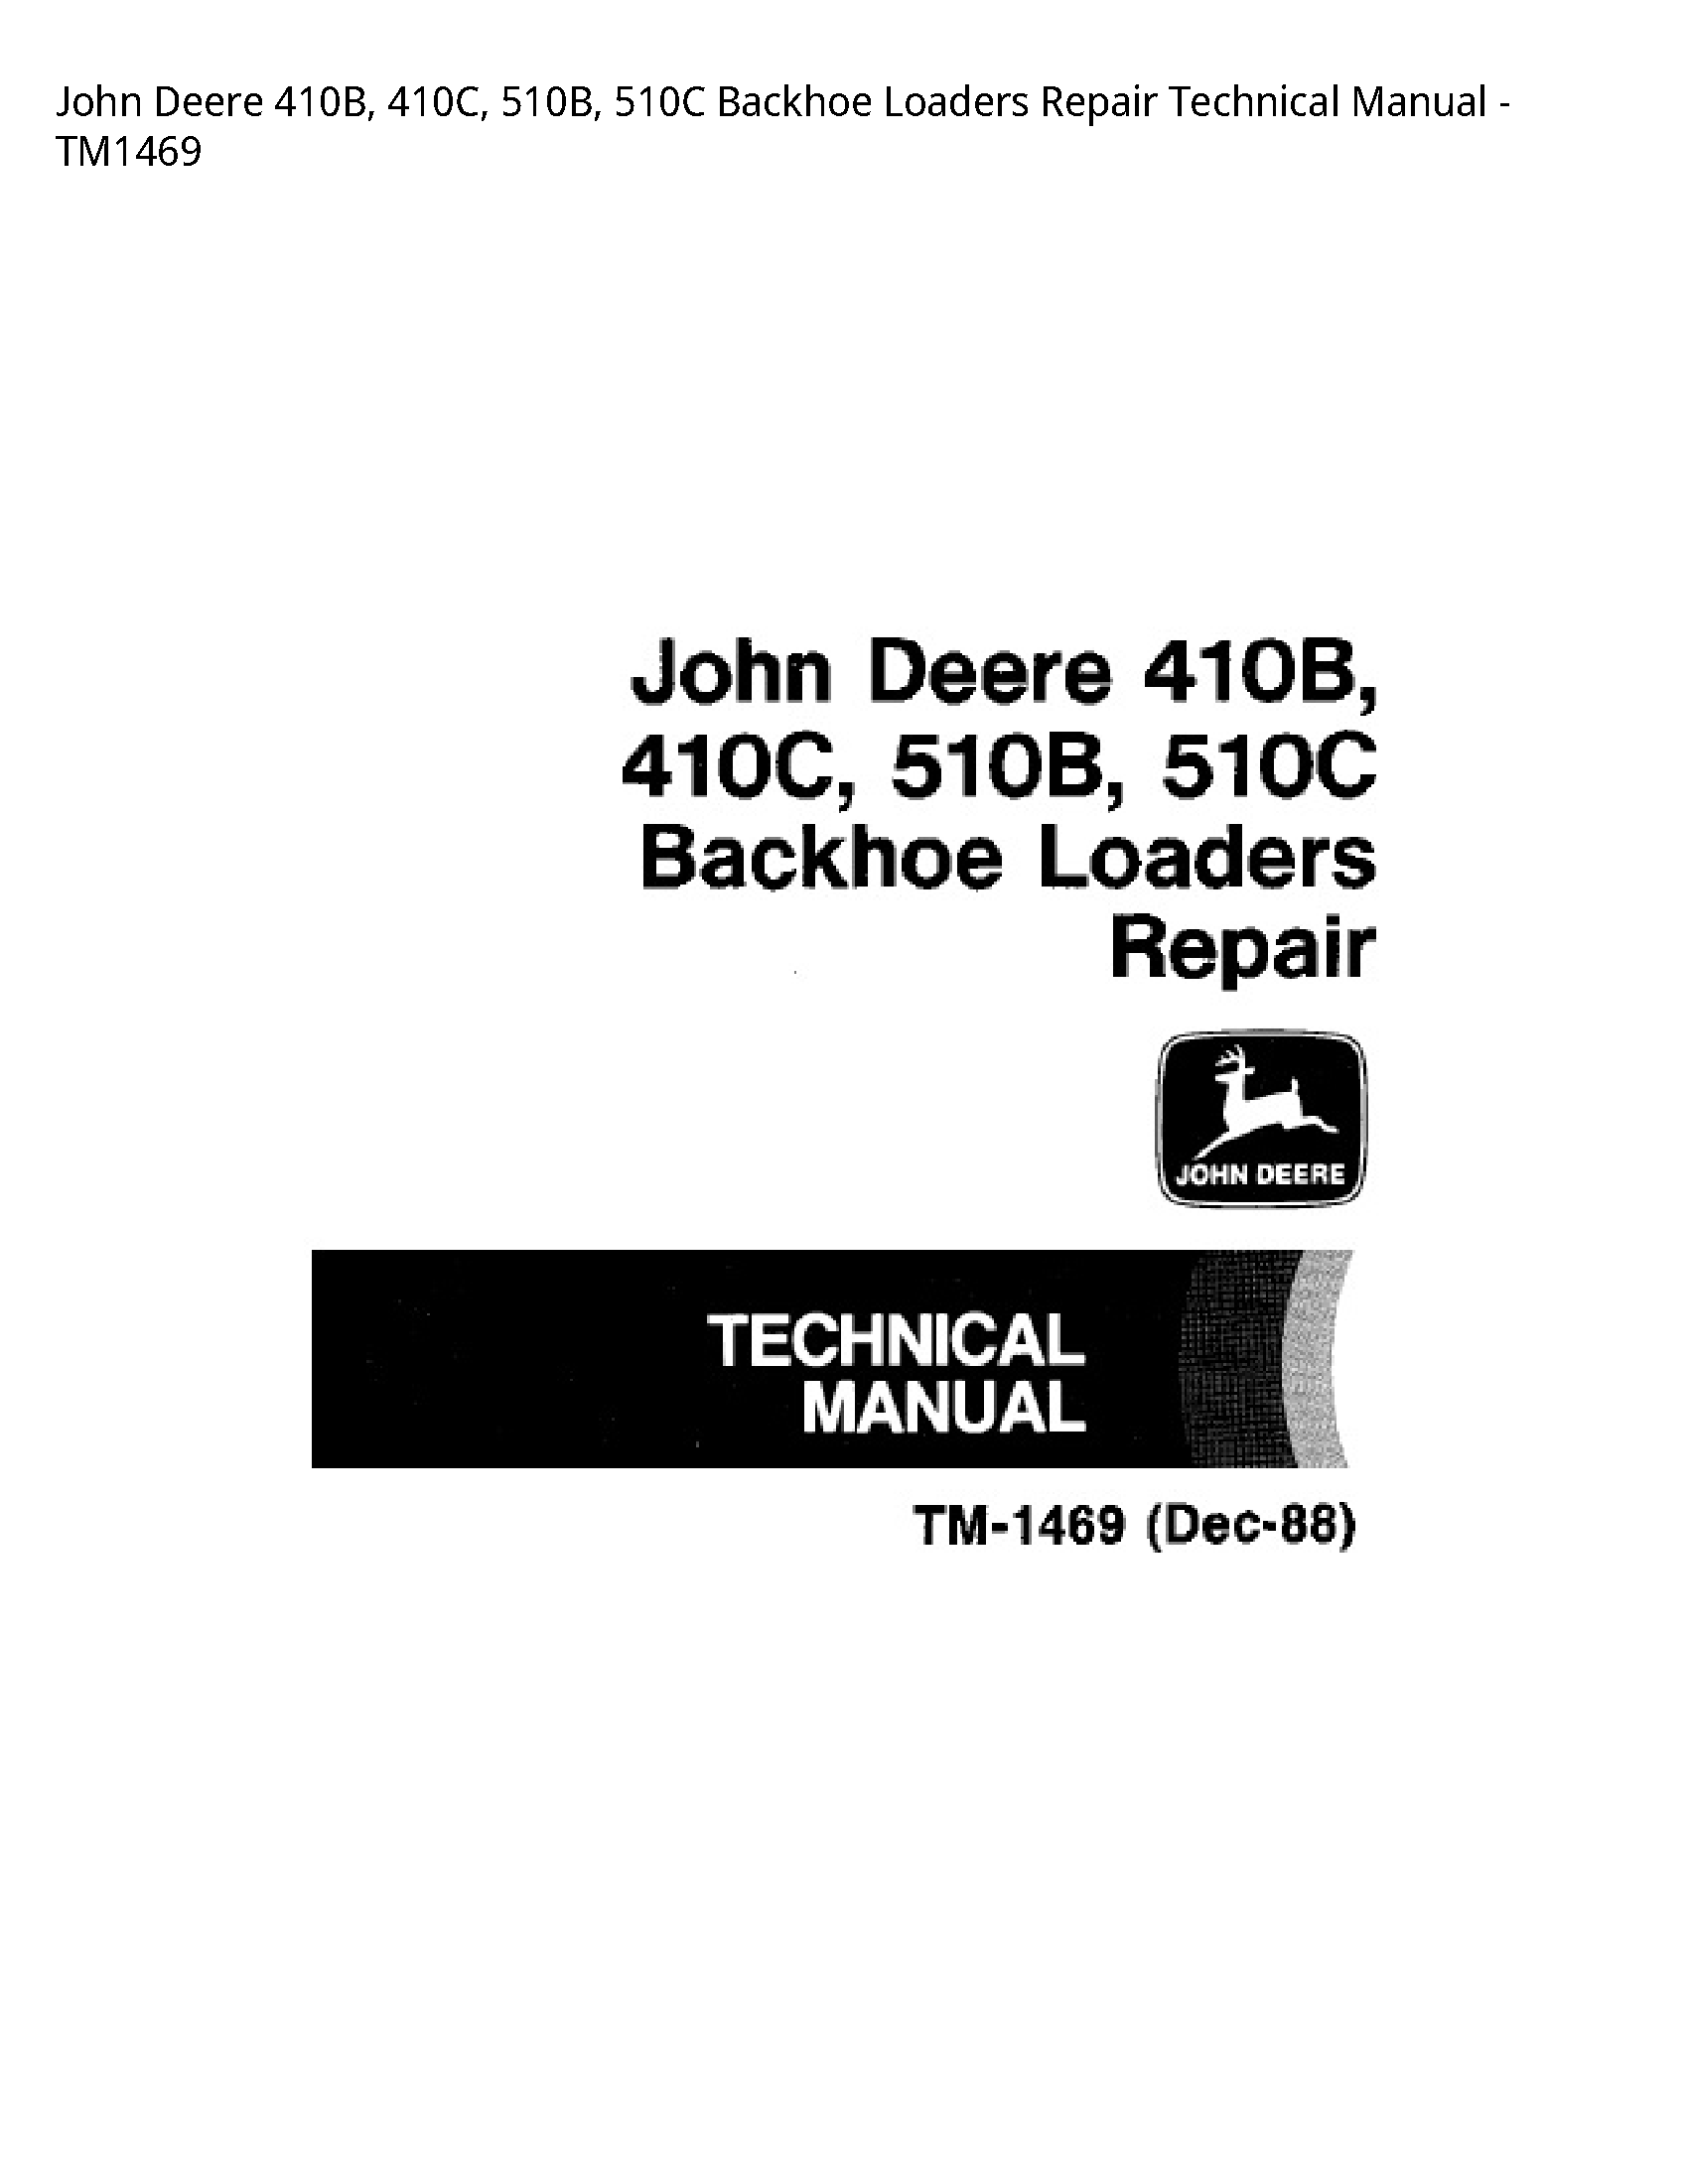 John Deere 410B Backhoe Loaders Repair Technical manual